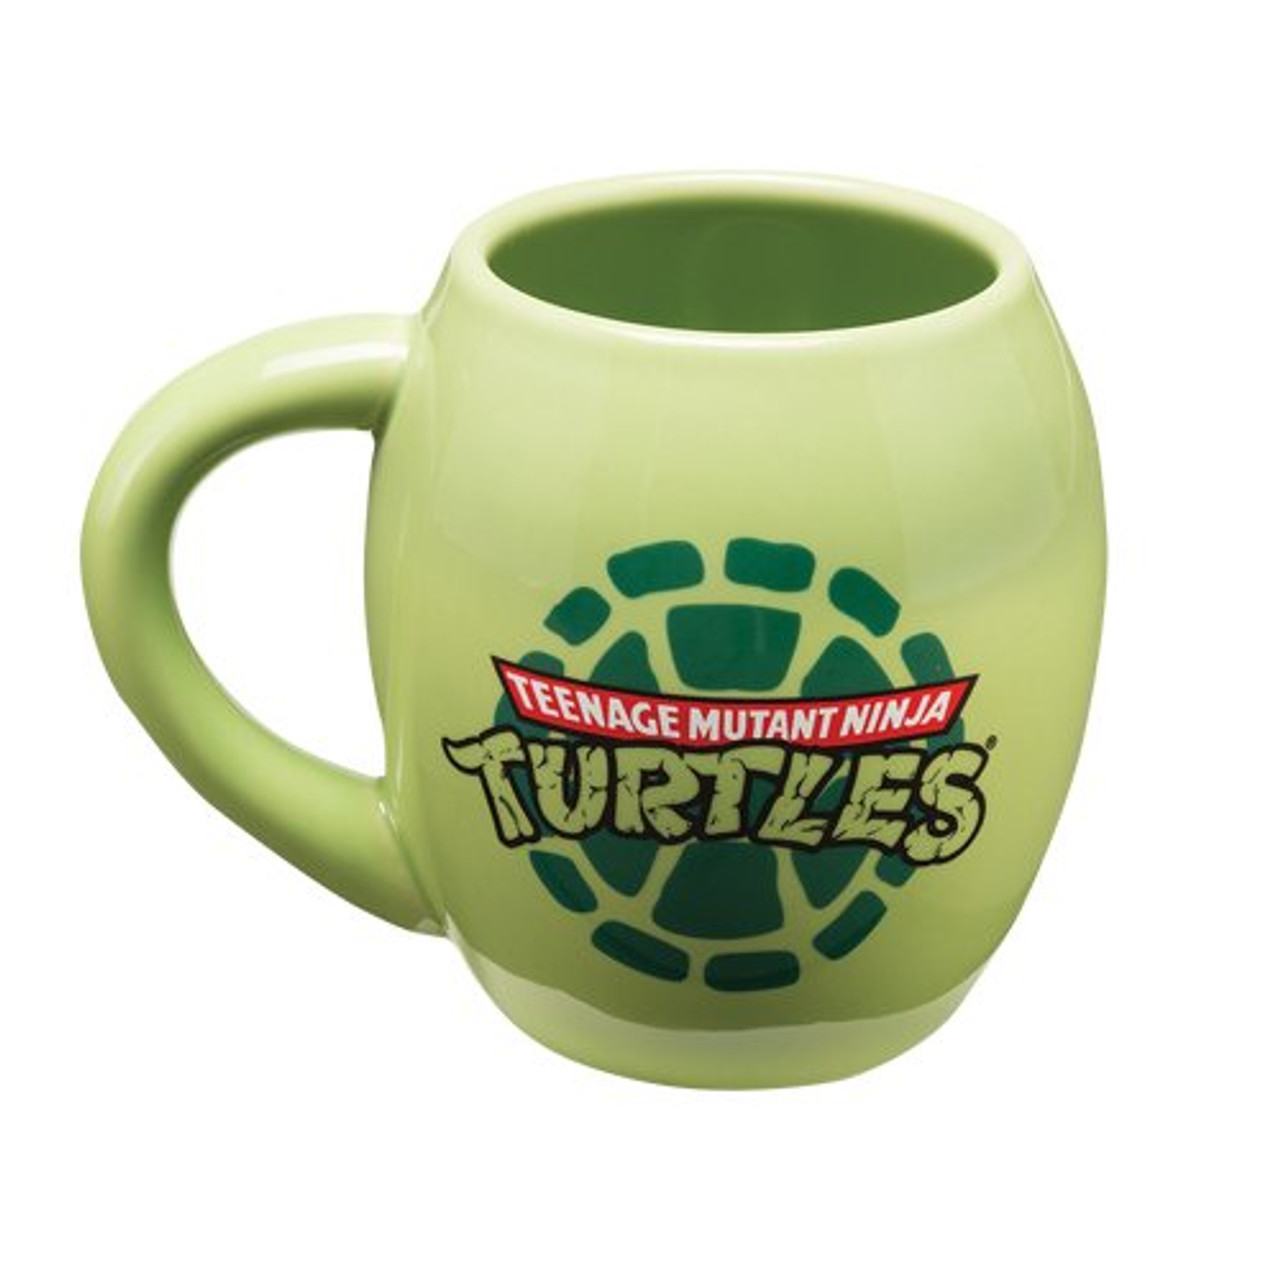 Teenage Mutant Ninja Turtles 20oz. White Ceramic Campfire Mug